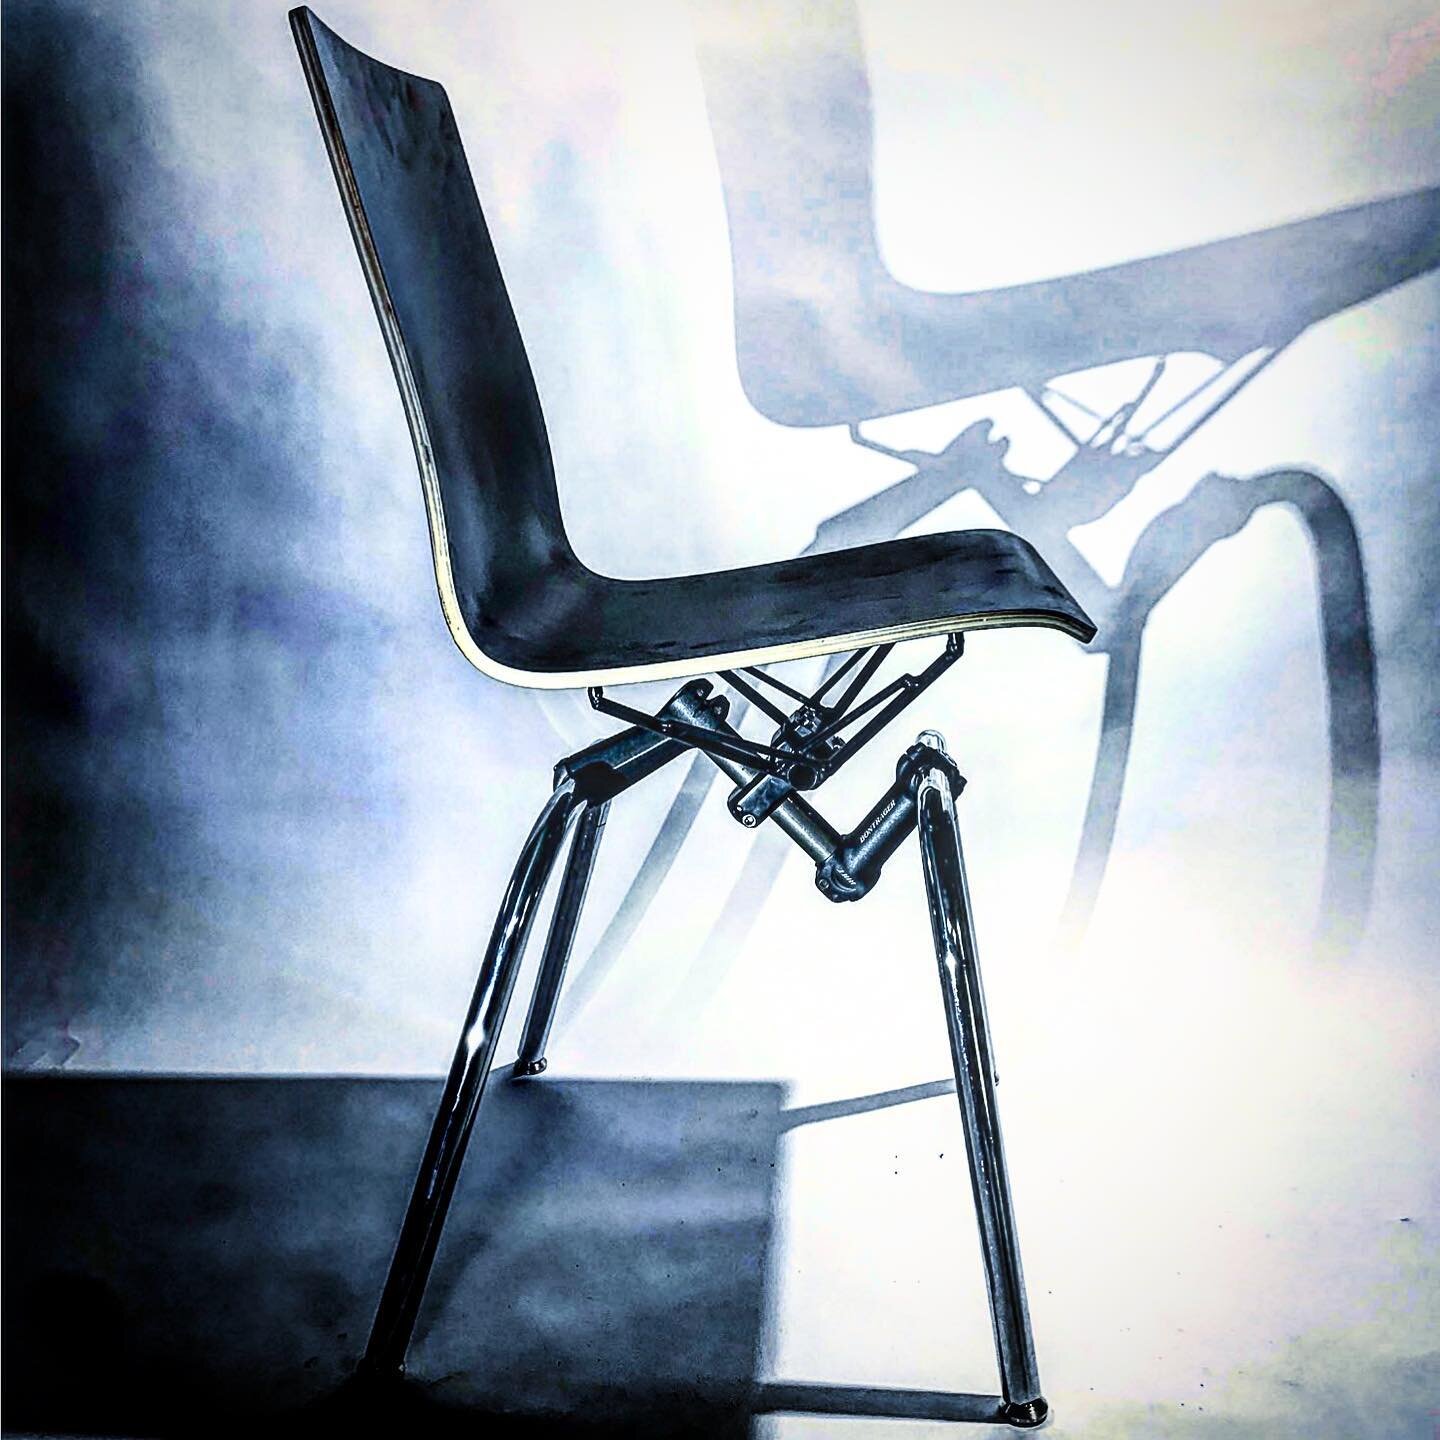 Chair prototype #01WHB. Molded plywood, handlebars, handlebar clamps, fork steerer tube.
#bikefurniture #moldedplywood #modularfurniture #diningchair #loungechair #clampdown #theclash